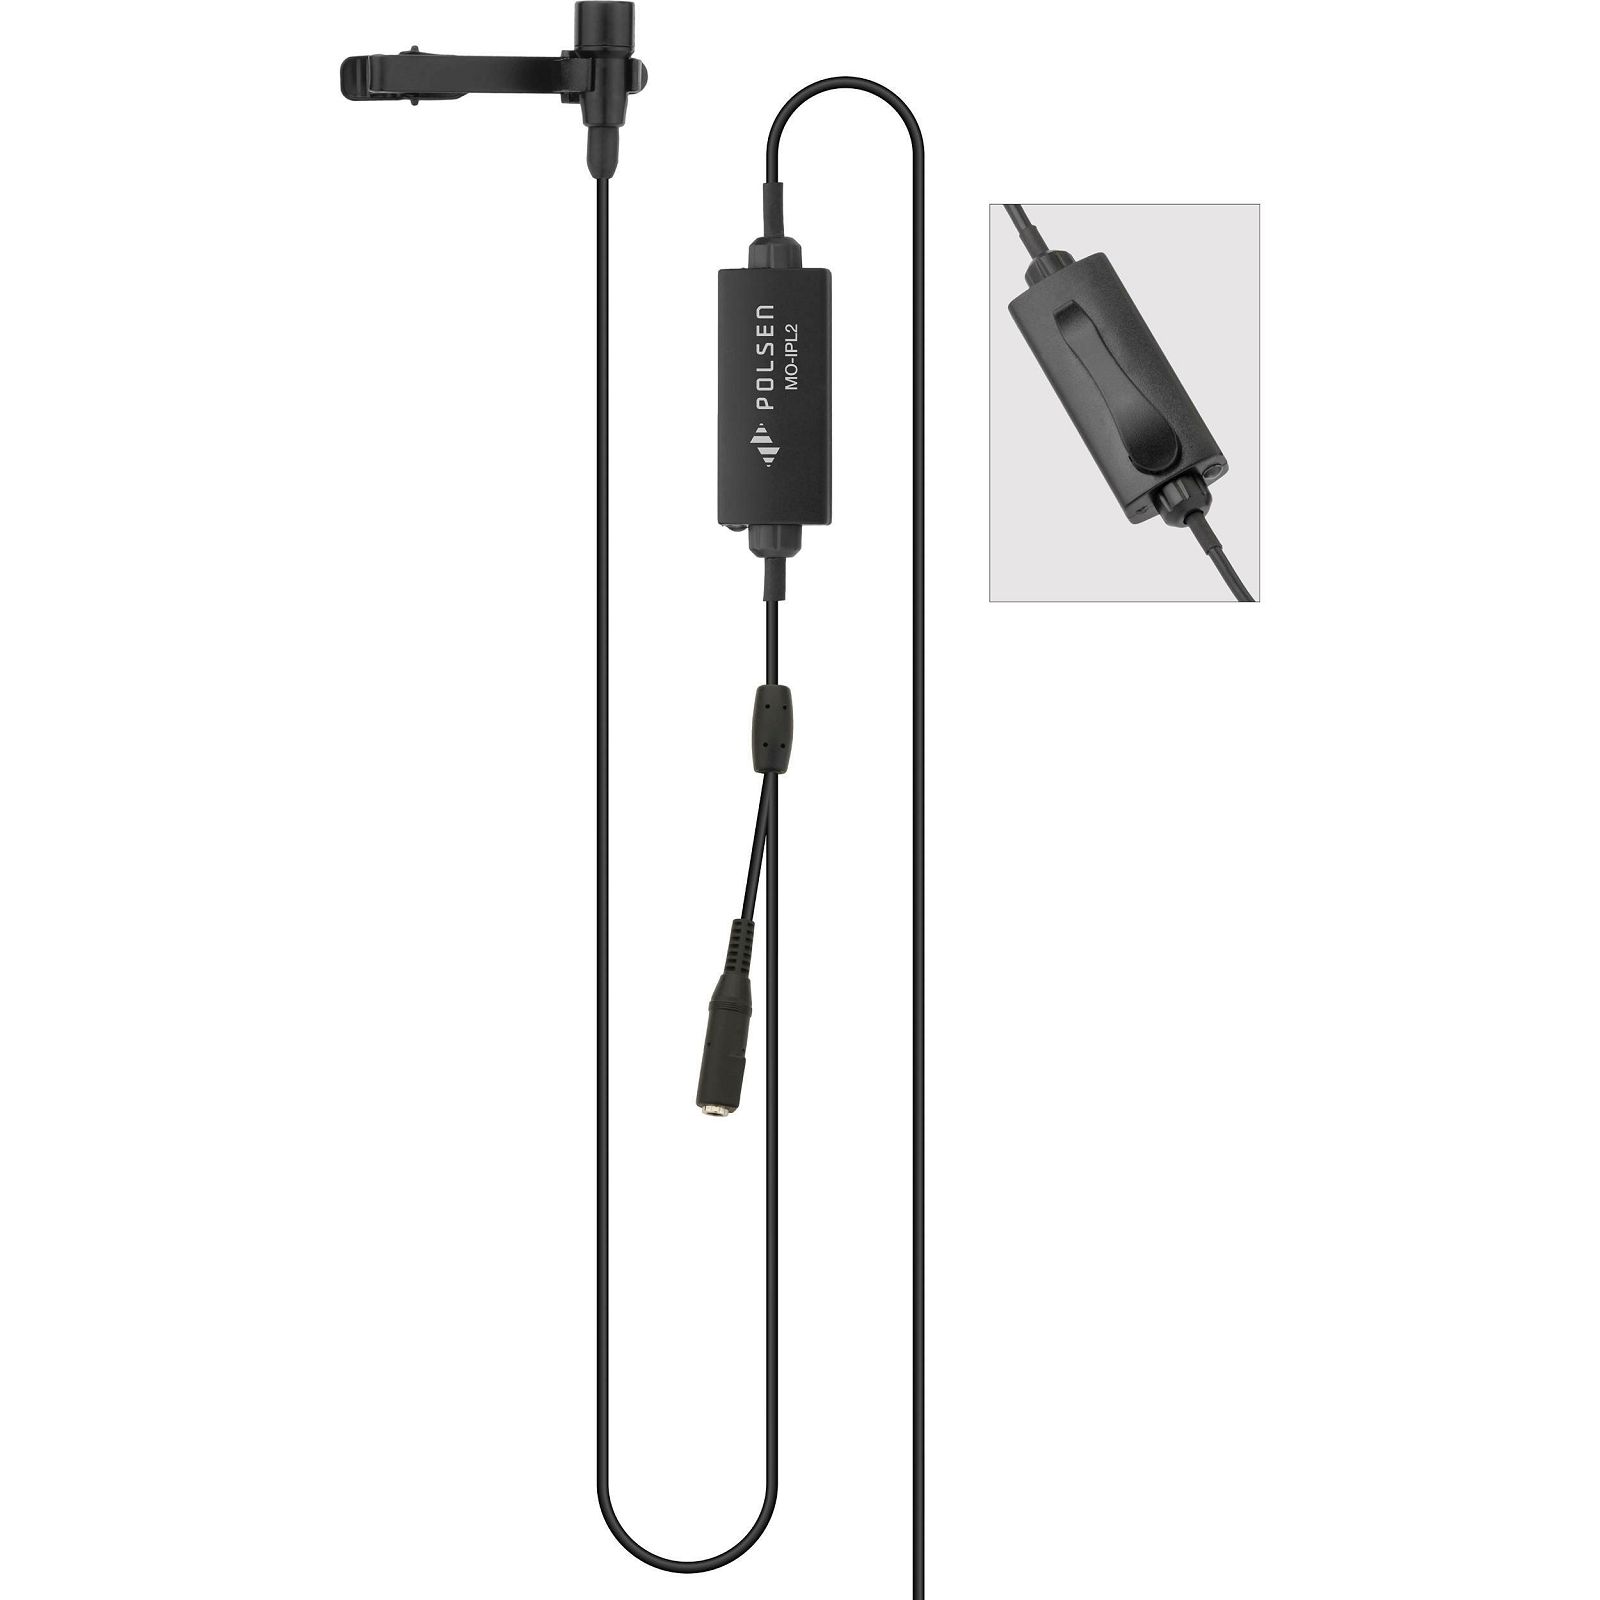 Saramonic LavMicro DI Lavalier Microphone with lightning connector lavalier mikrofon za iPhone X/8/7/7+/SE/6s/6/5S/5, iPad, iPod Touch